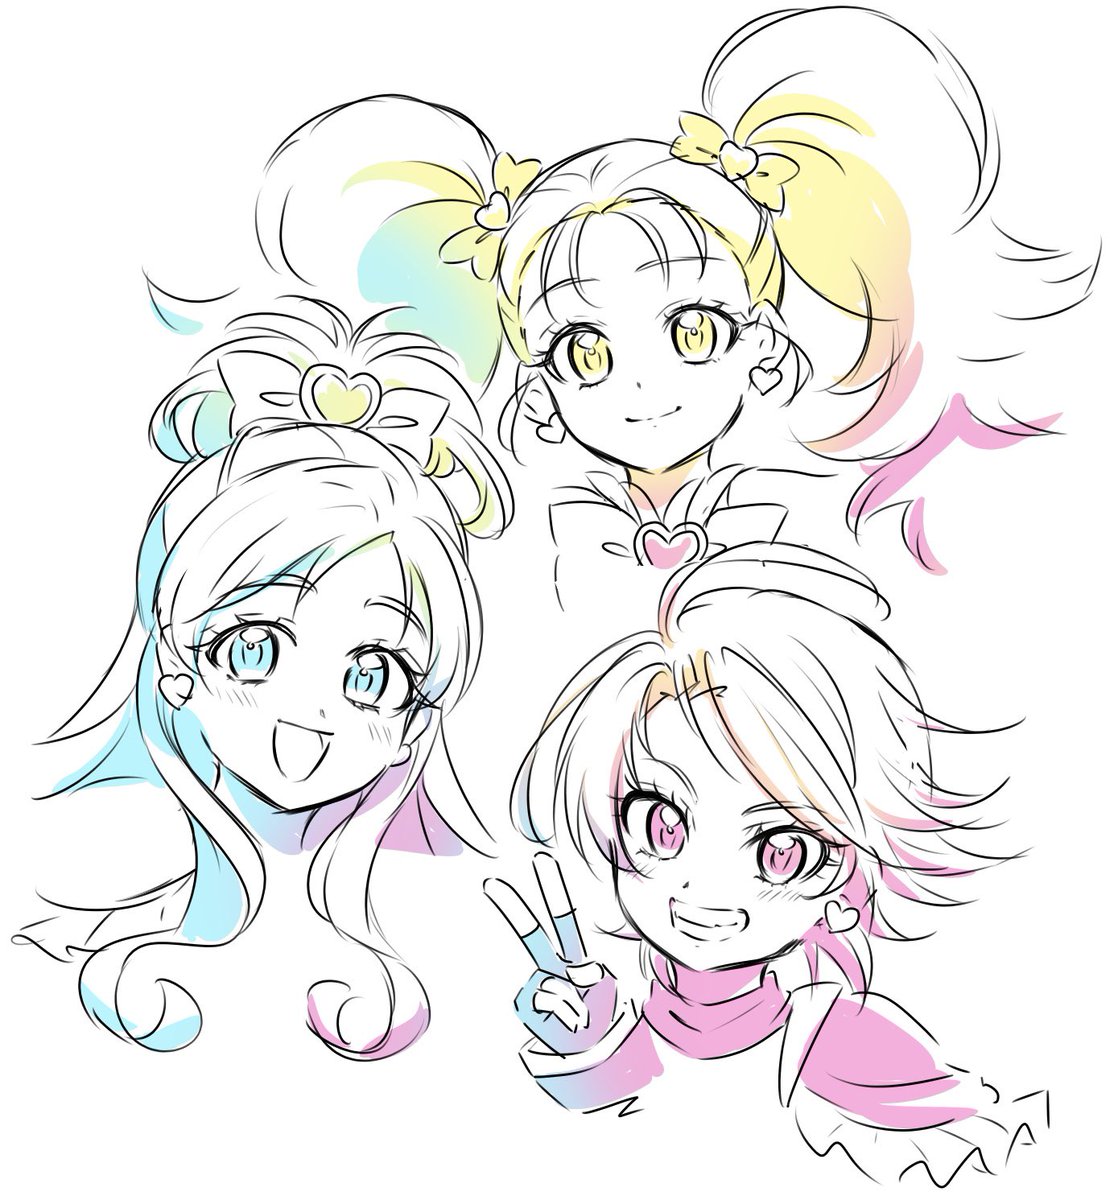 cure black ,cure white ,misumi nagisa multiple girls smile 3girls jewelry heart earrings earrings long hair  illustration images